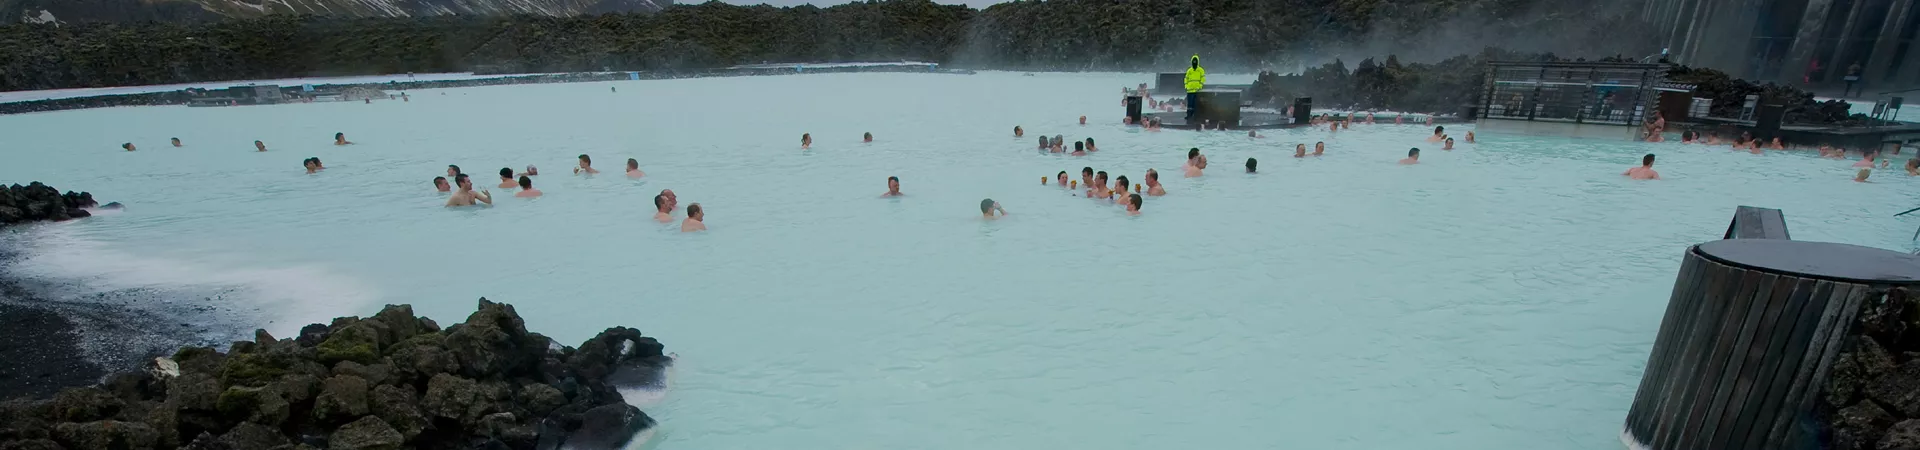 People having a bath in Blue Lagoon, Iceland